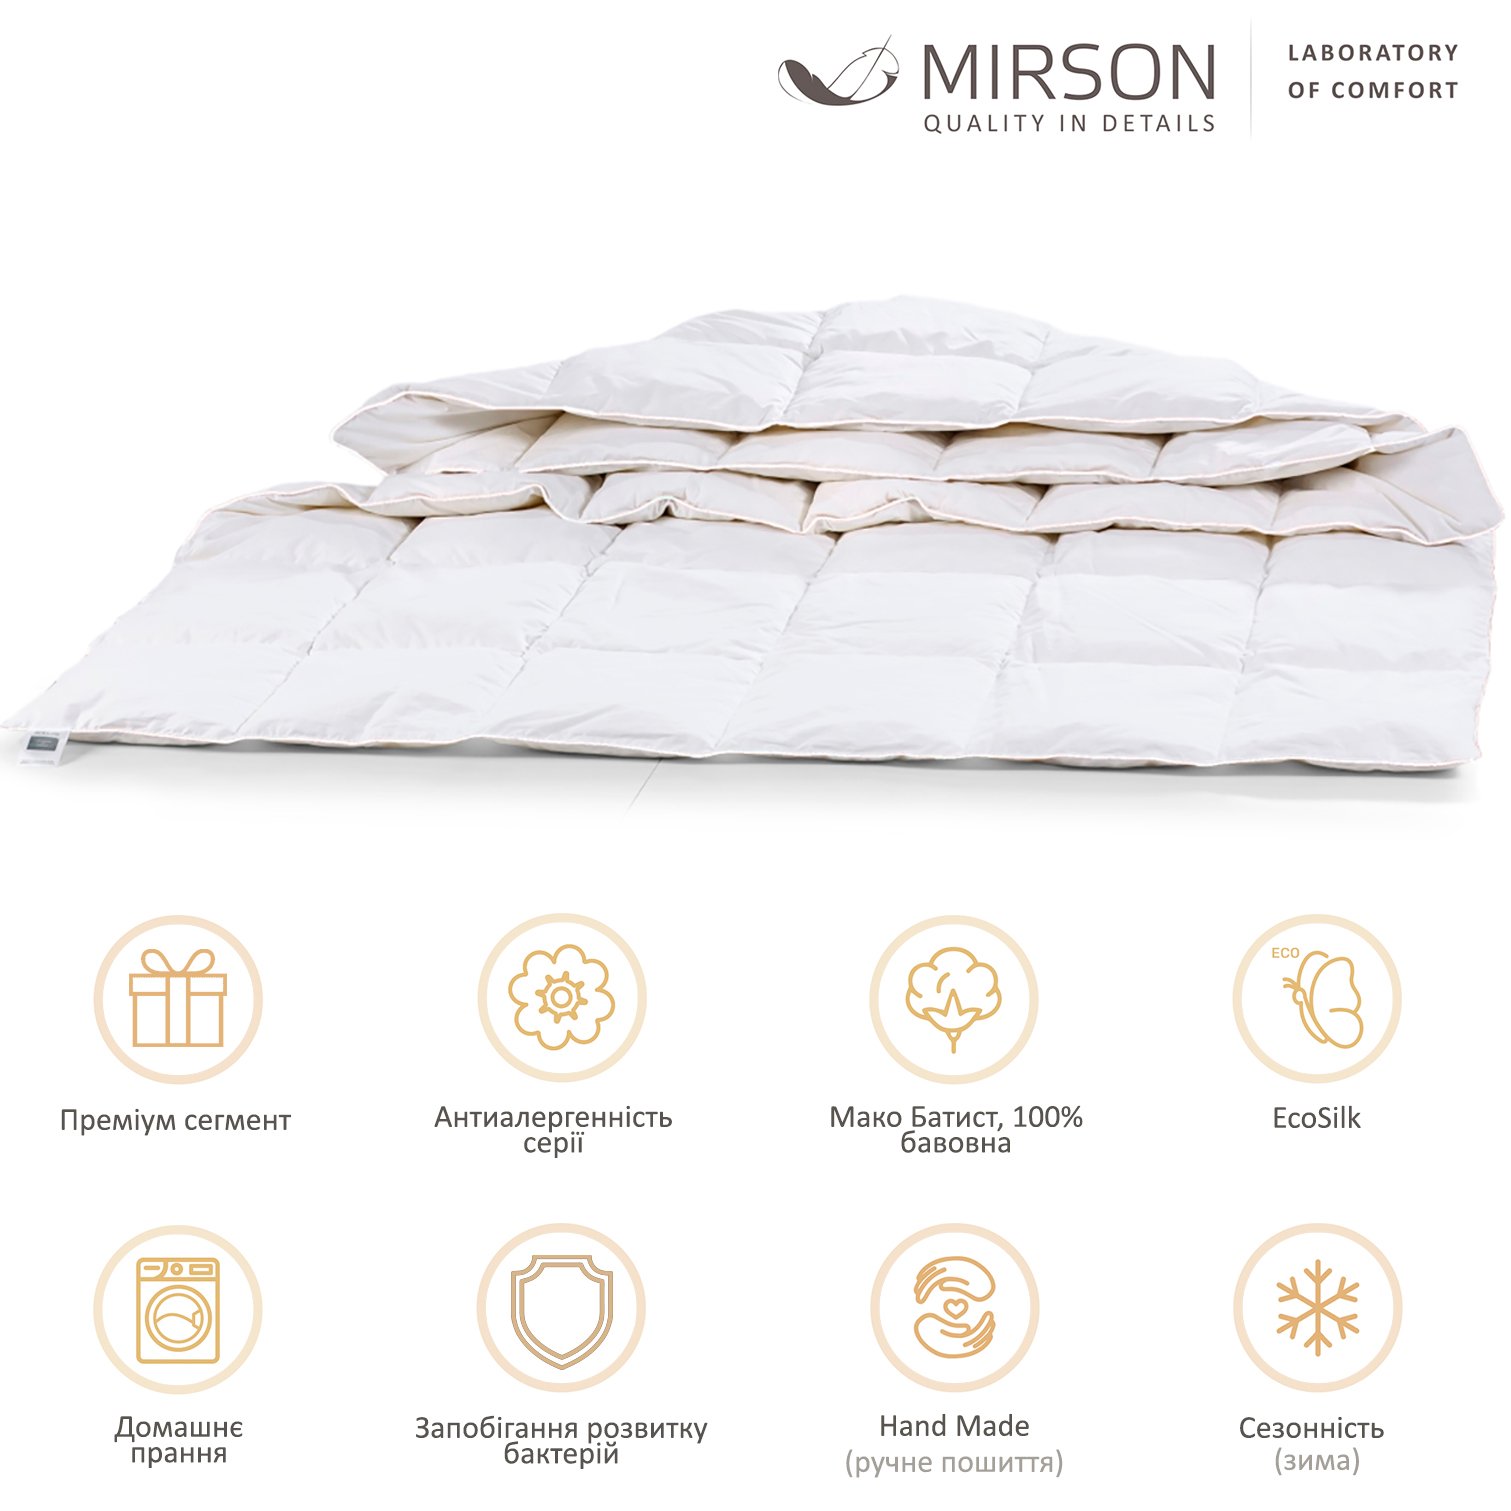 Ковдра антиалергенна MirSon Luxury Exclusive EcoSilk №1317, зимова, 110x140 см, біла (237054433) - фото 5